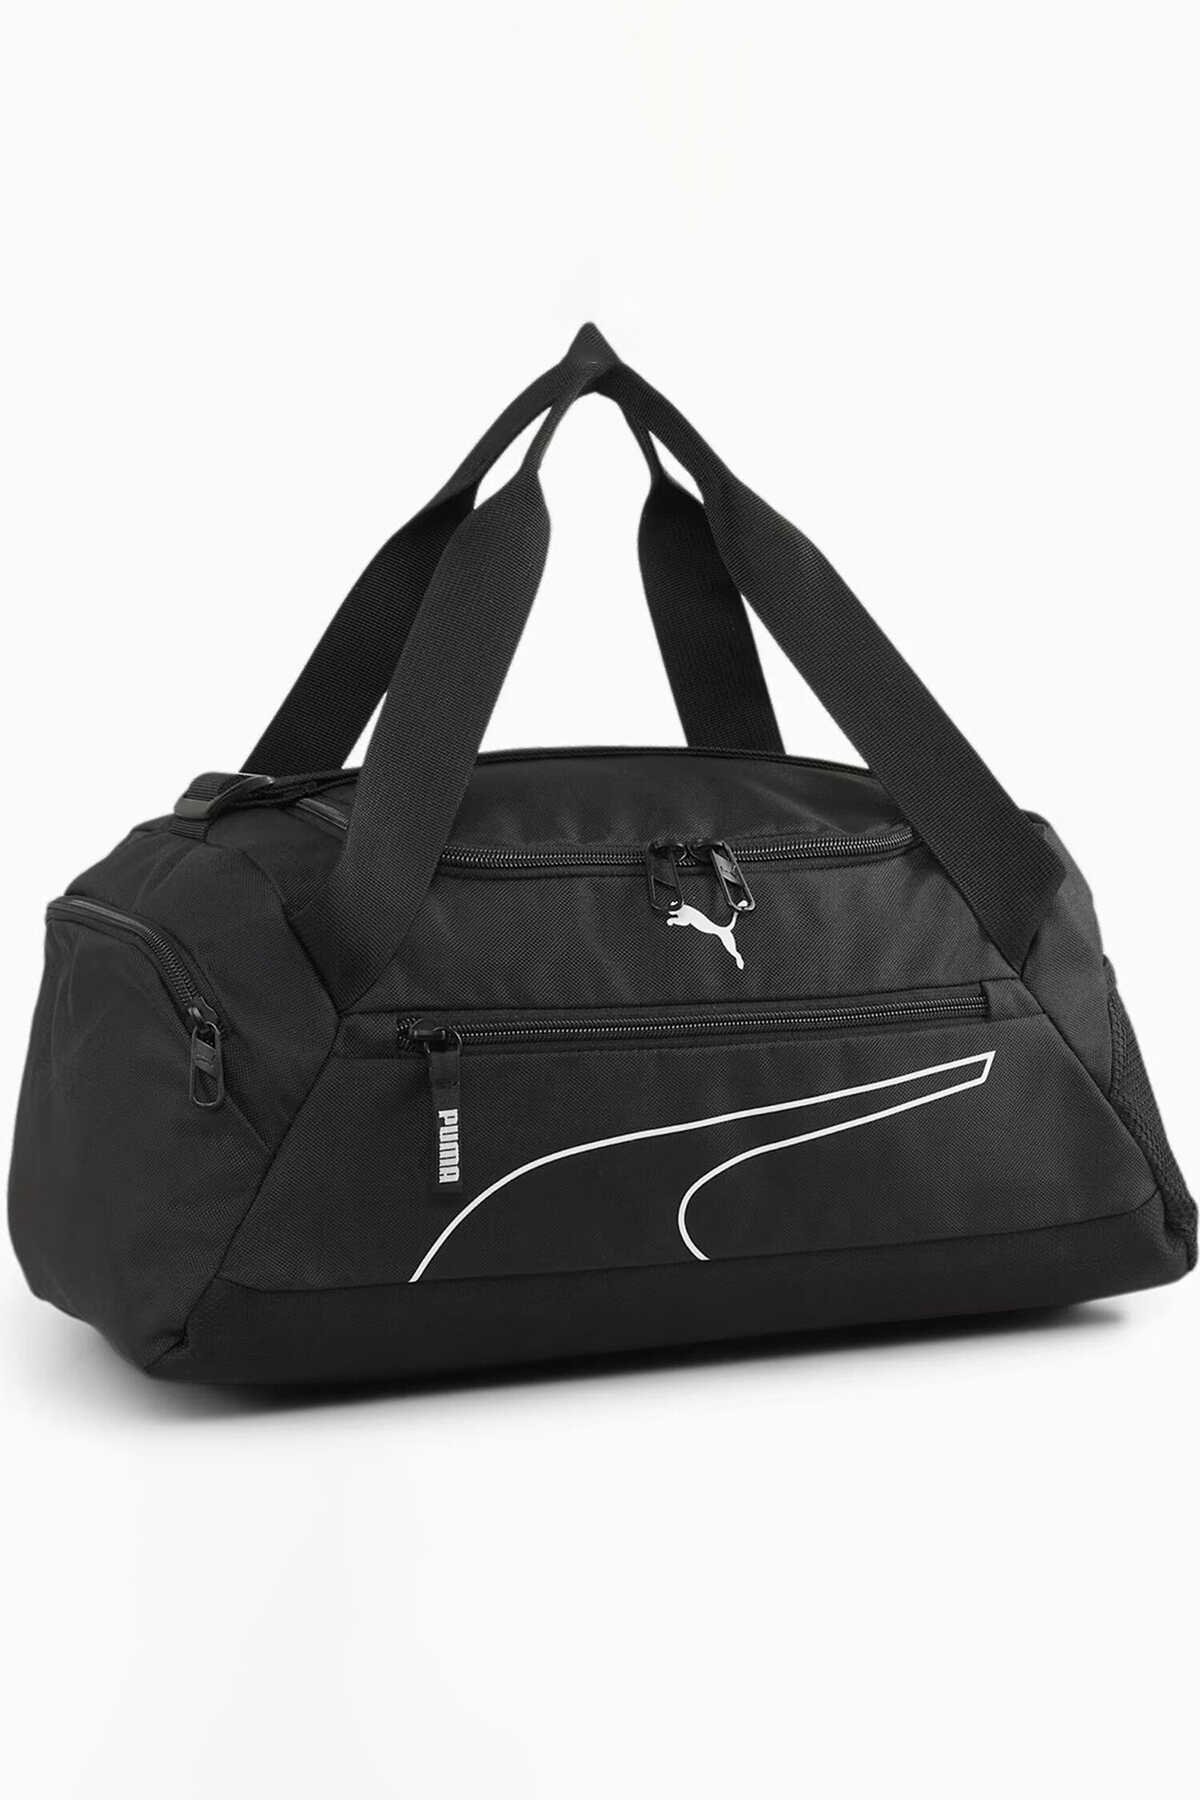 Puma - Puma Fundamentals Sports Bag Unisex Spor Çantası Siyah